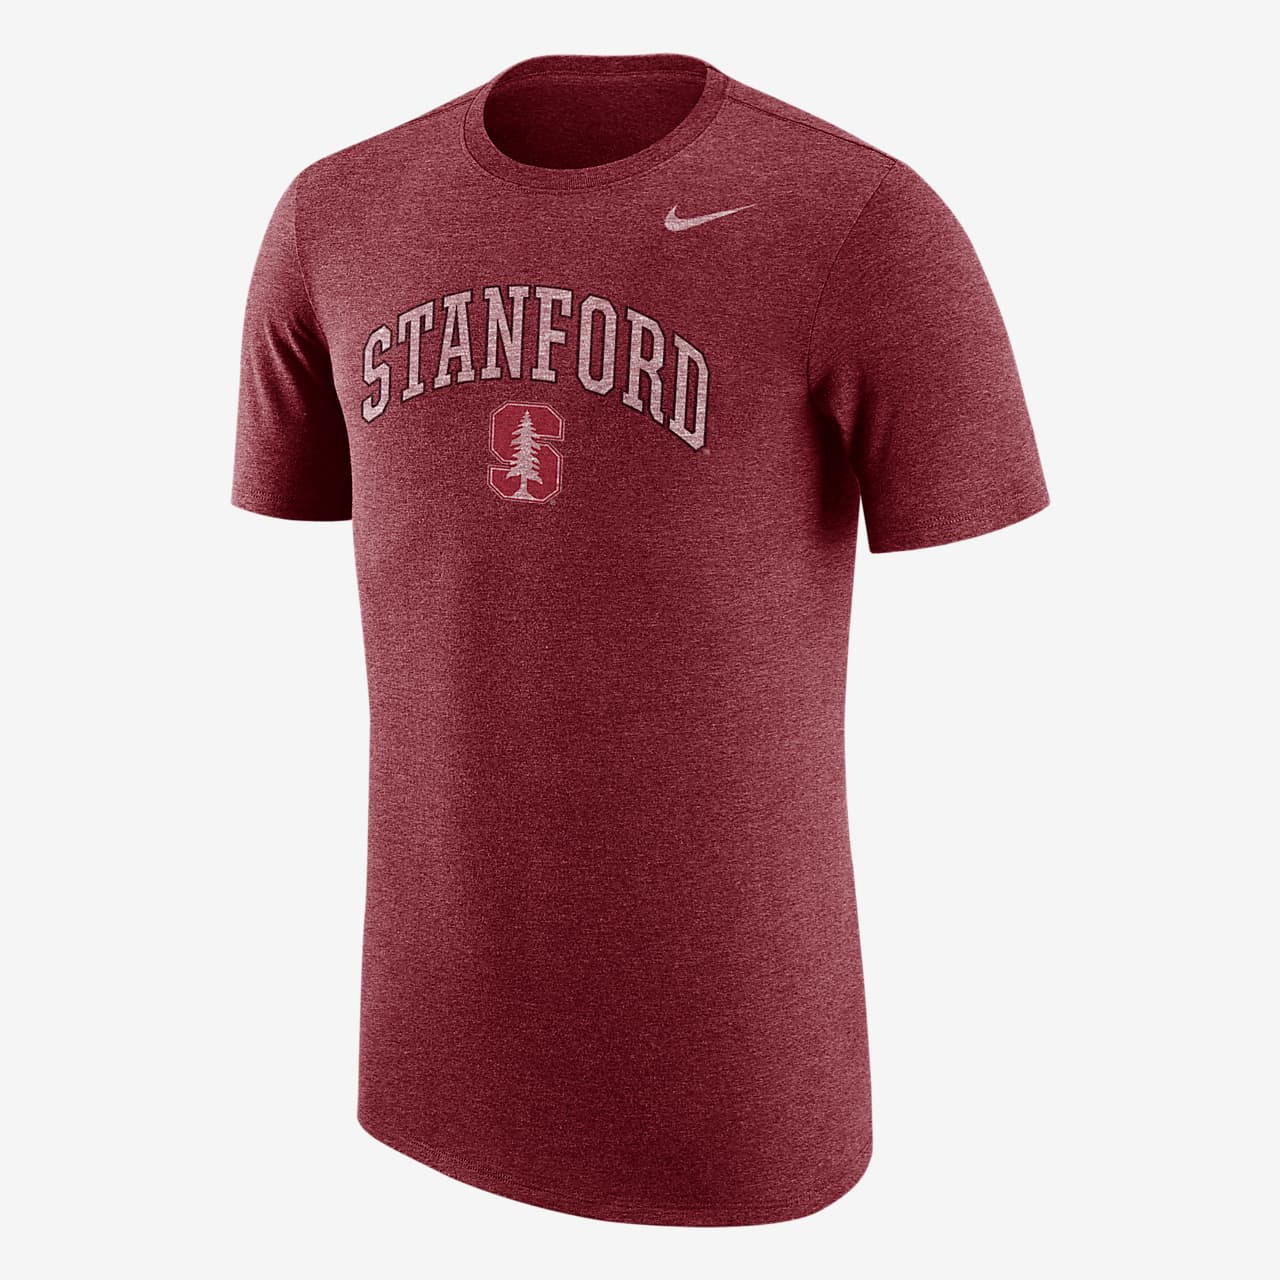 Nike College (Stanford) Men's T-Shirt 